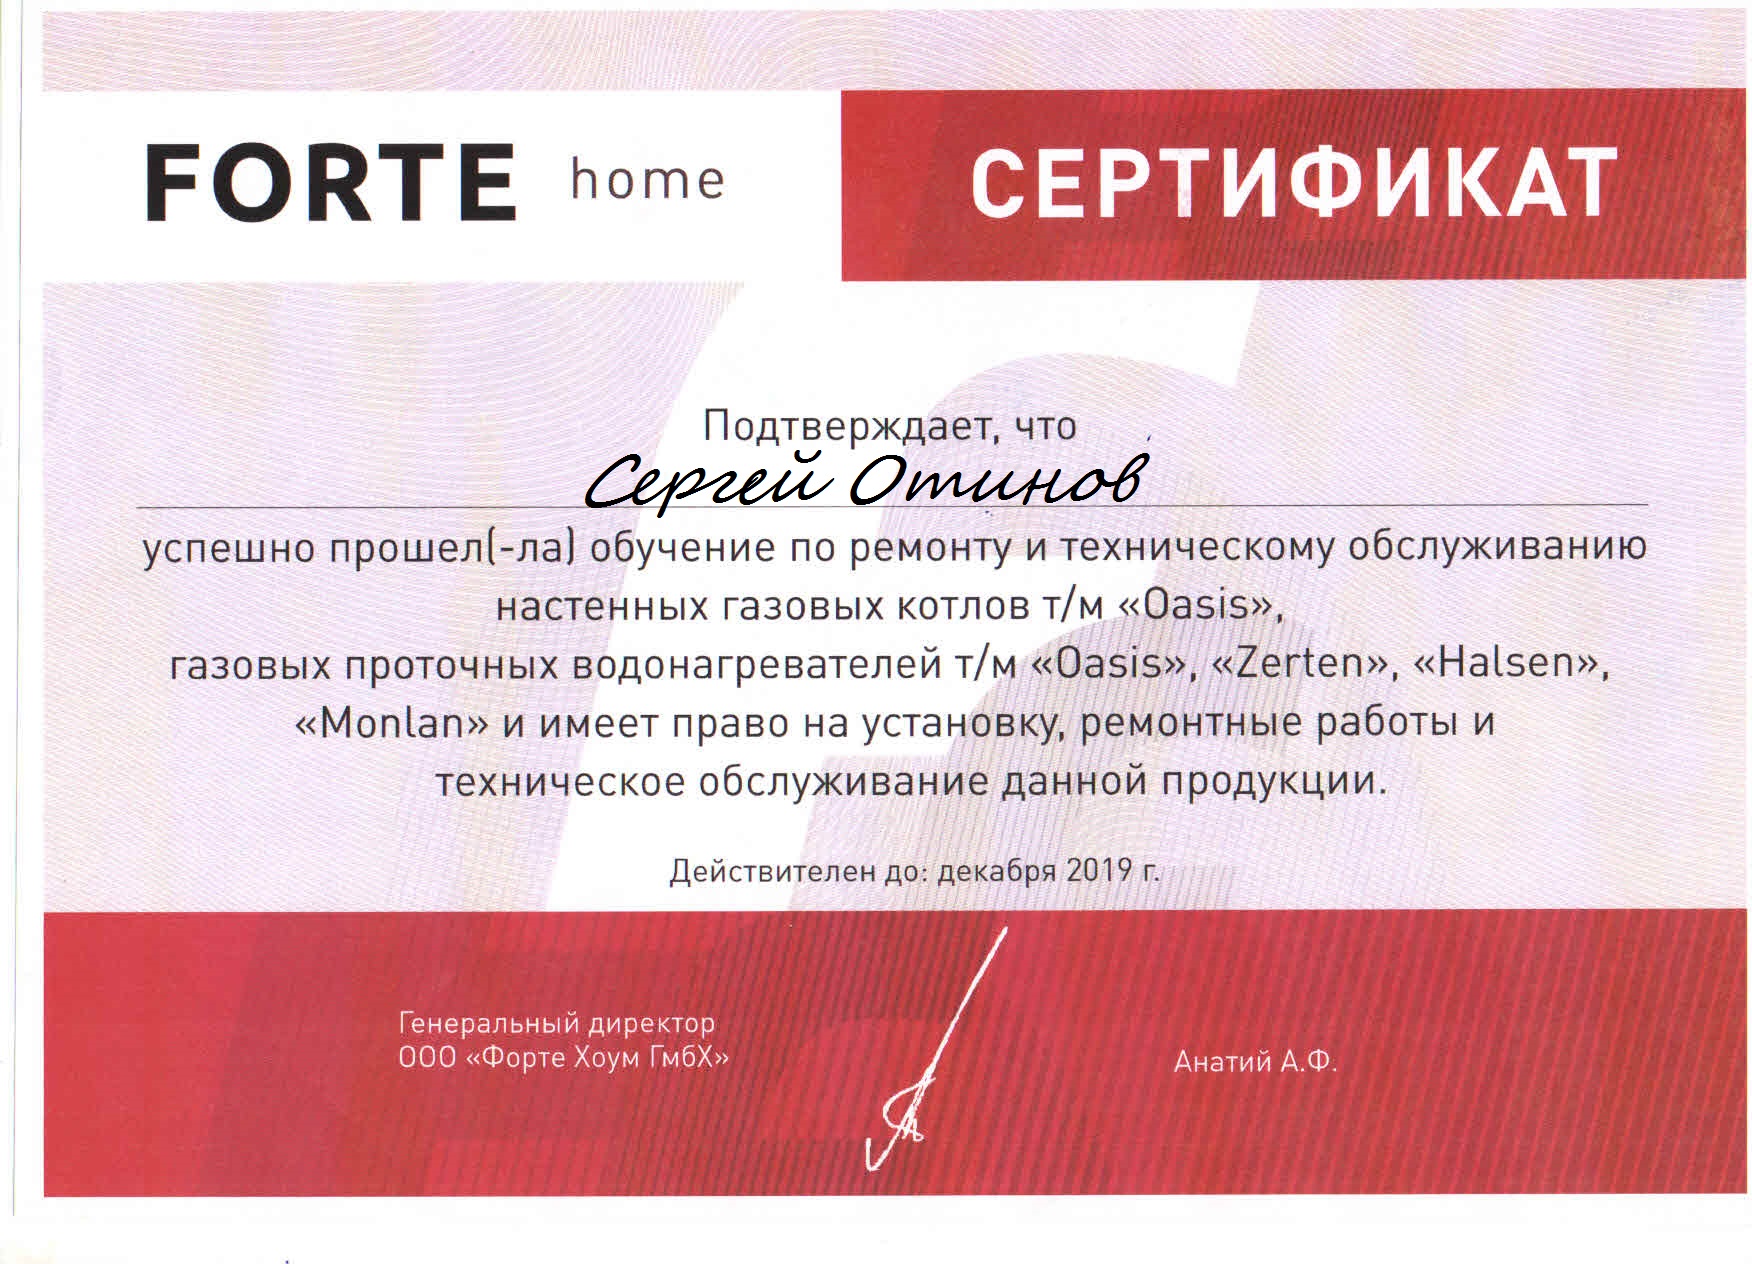 Форте хоум гмбх. Сертификат на обслуживание газовых котлов. Forte Home GMBH. Форте ГМБХ. Хоум сертификат.